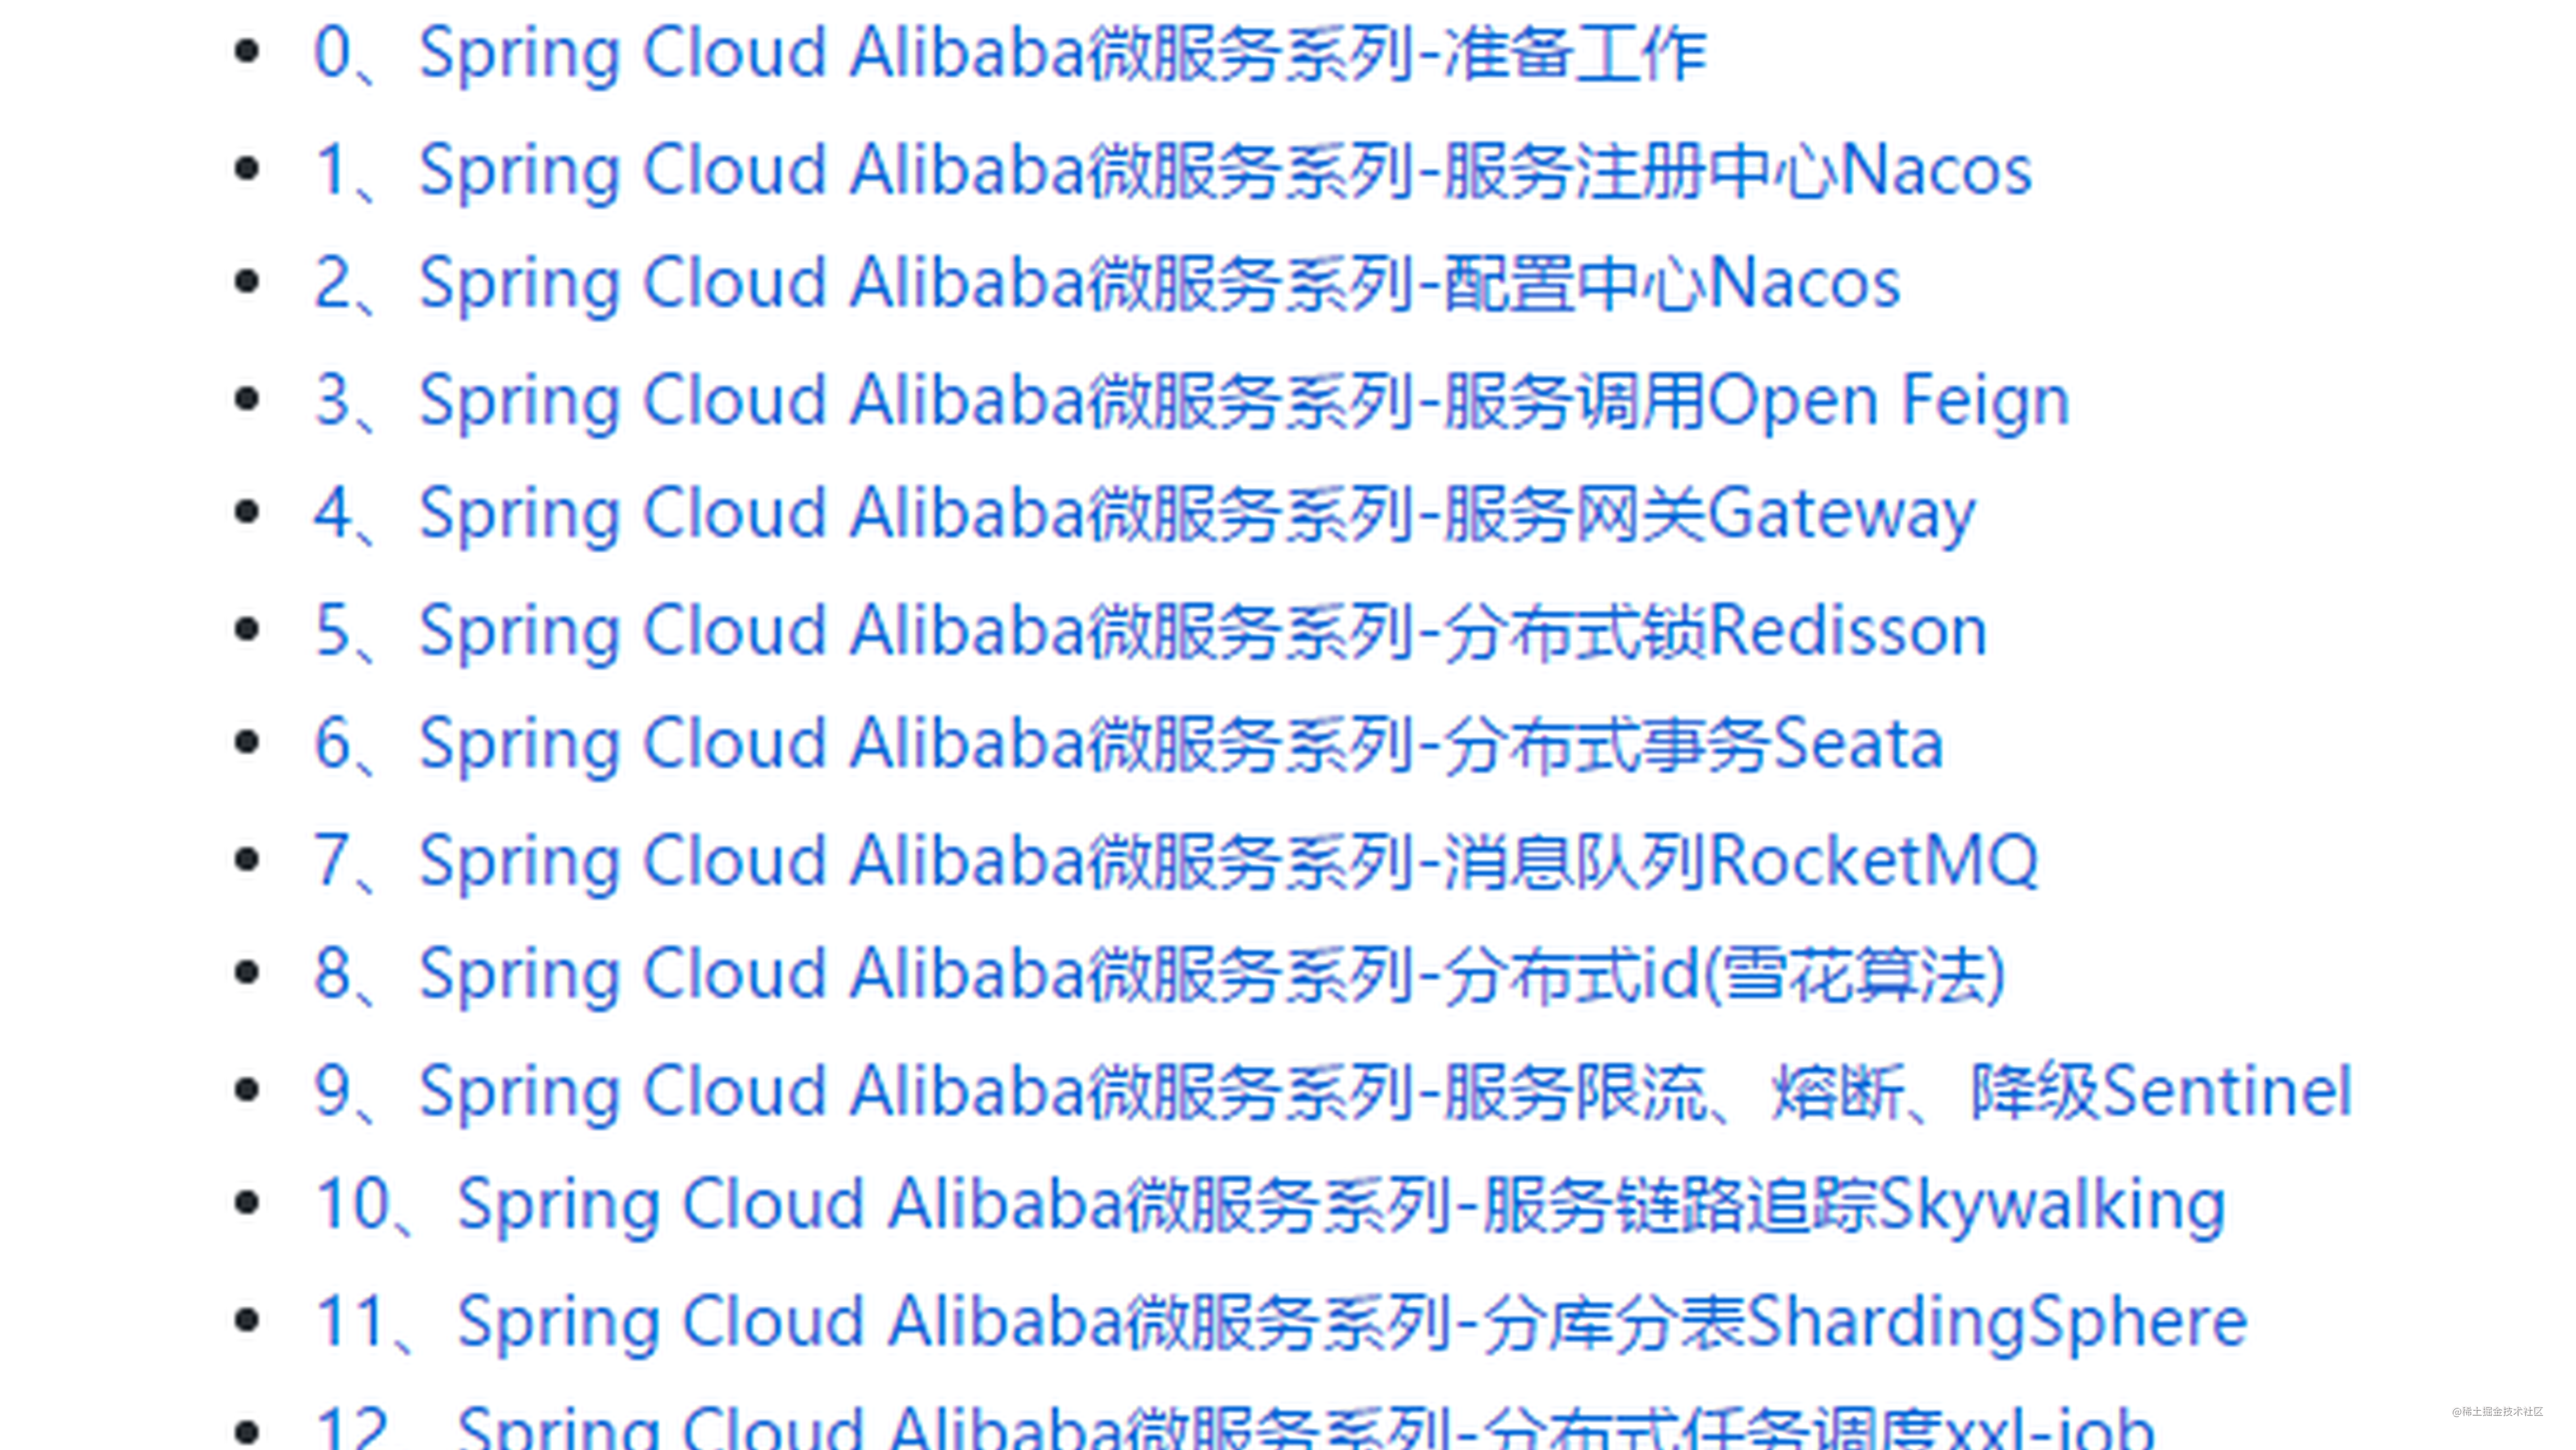 Spring Cloud Alibaba 消息队列RocketMQ